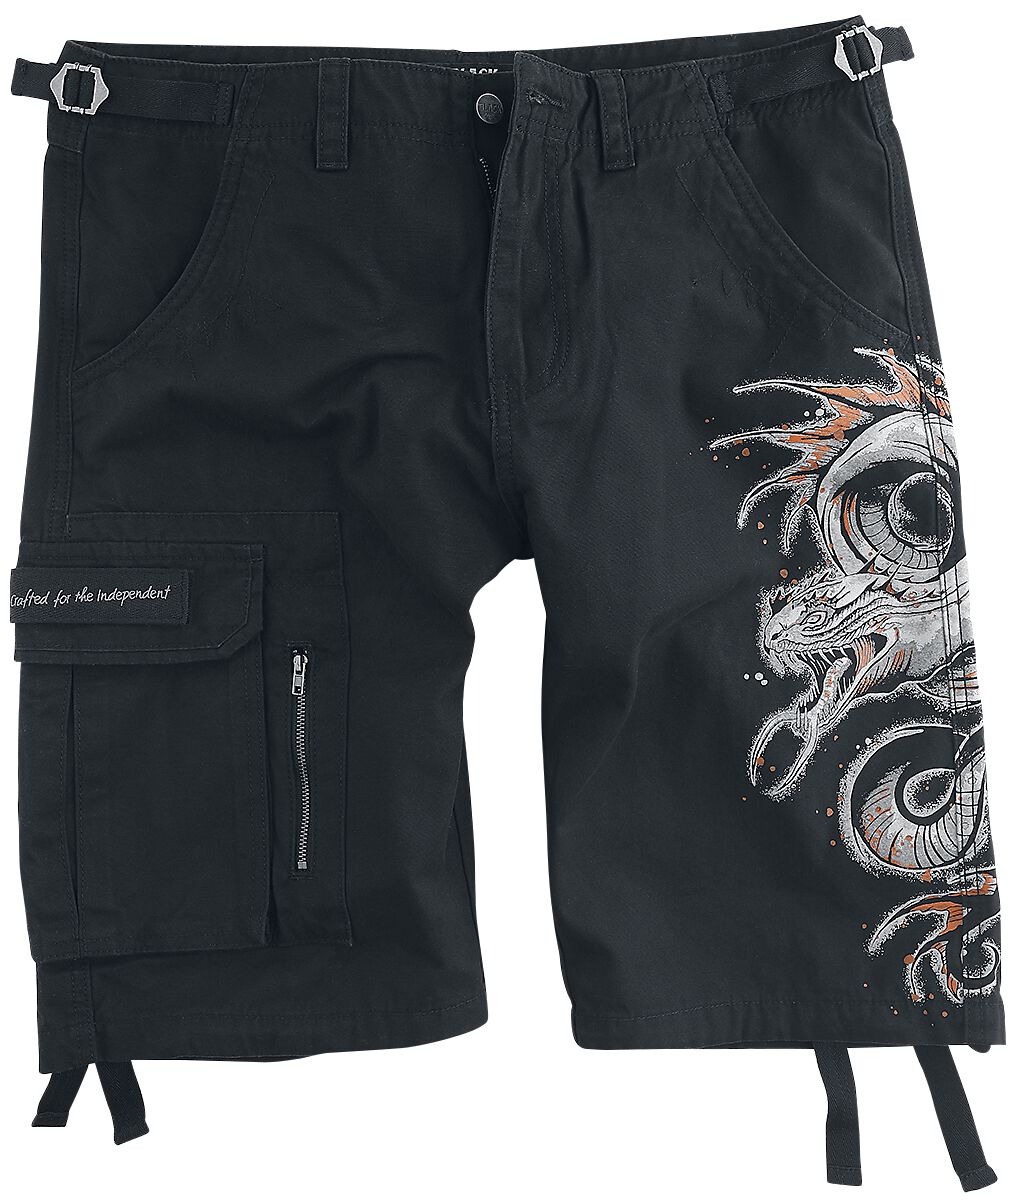 Image of Shorts di Black Premium by EMP - Shorts with dragon print - S a XXL - Uomo - nero